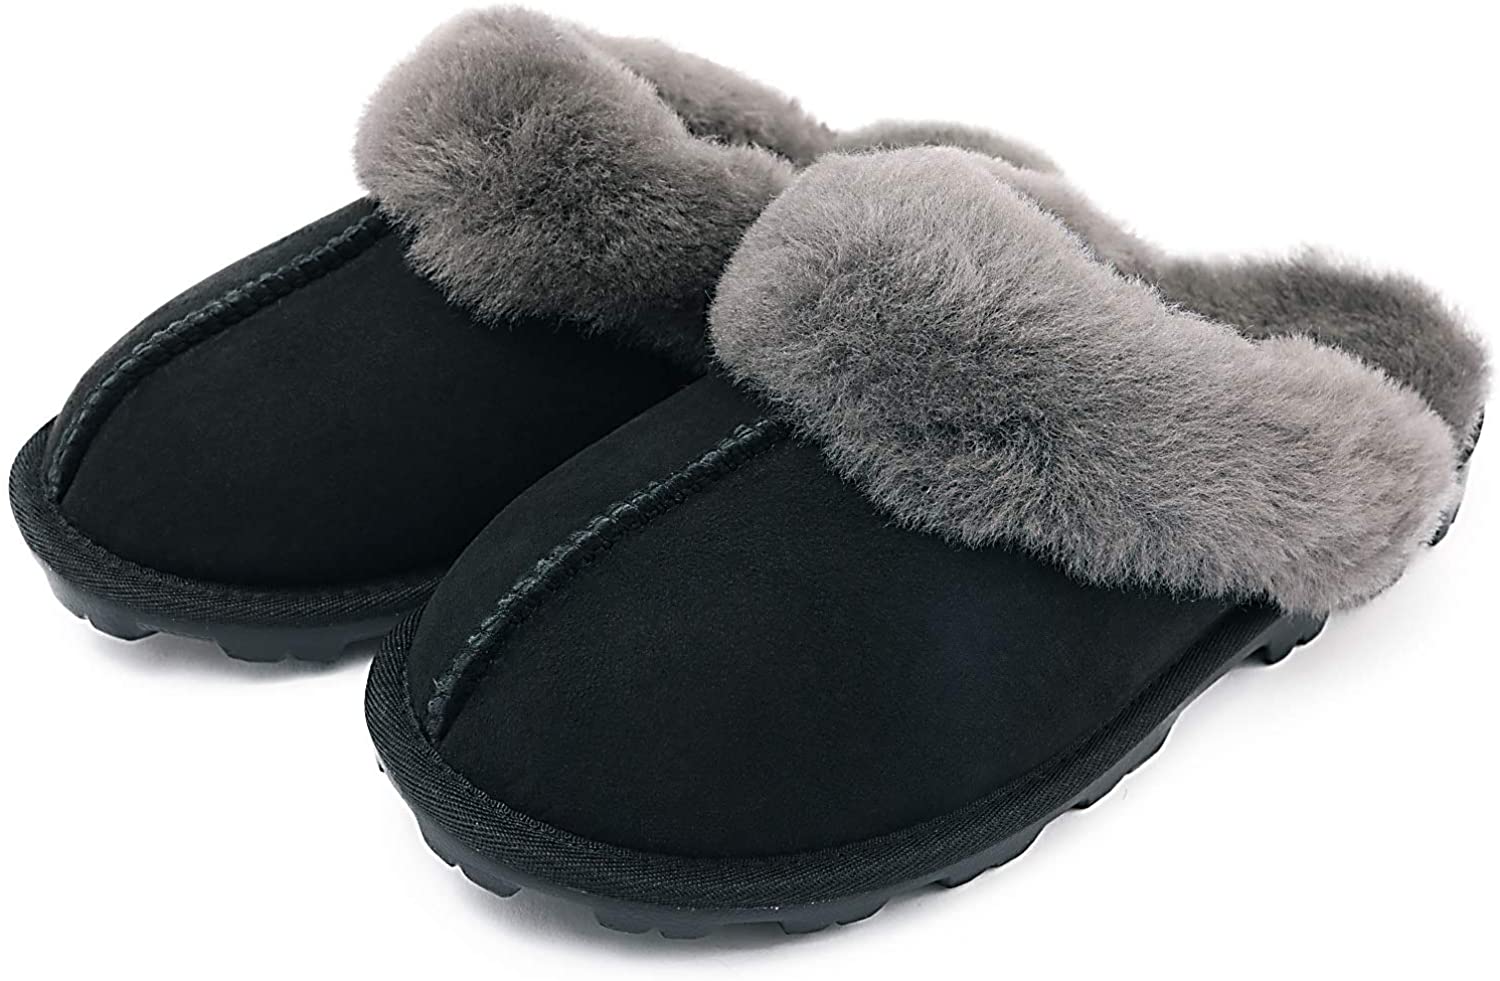 WaySoft Genuine Sheepskin Women Slippers, Water-Resistant and | eBay